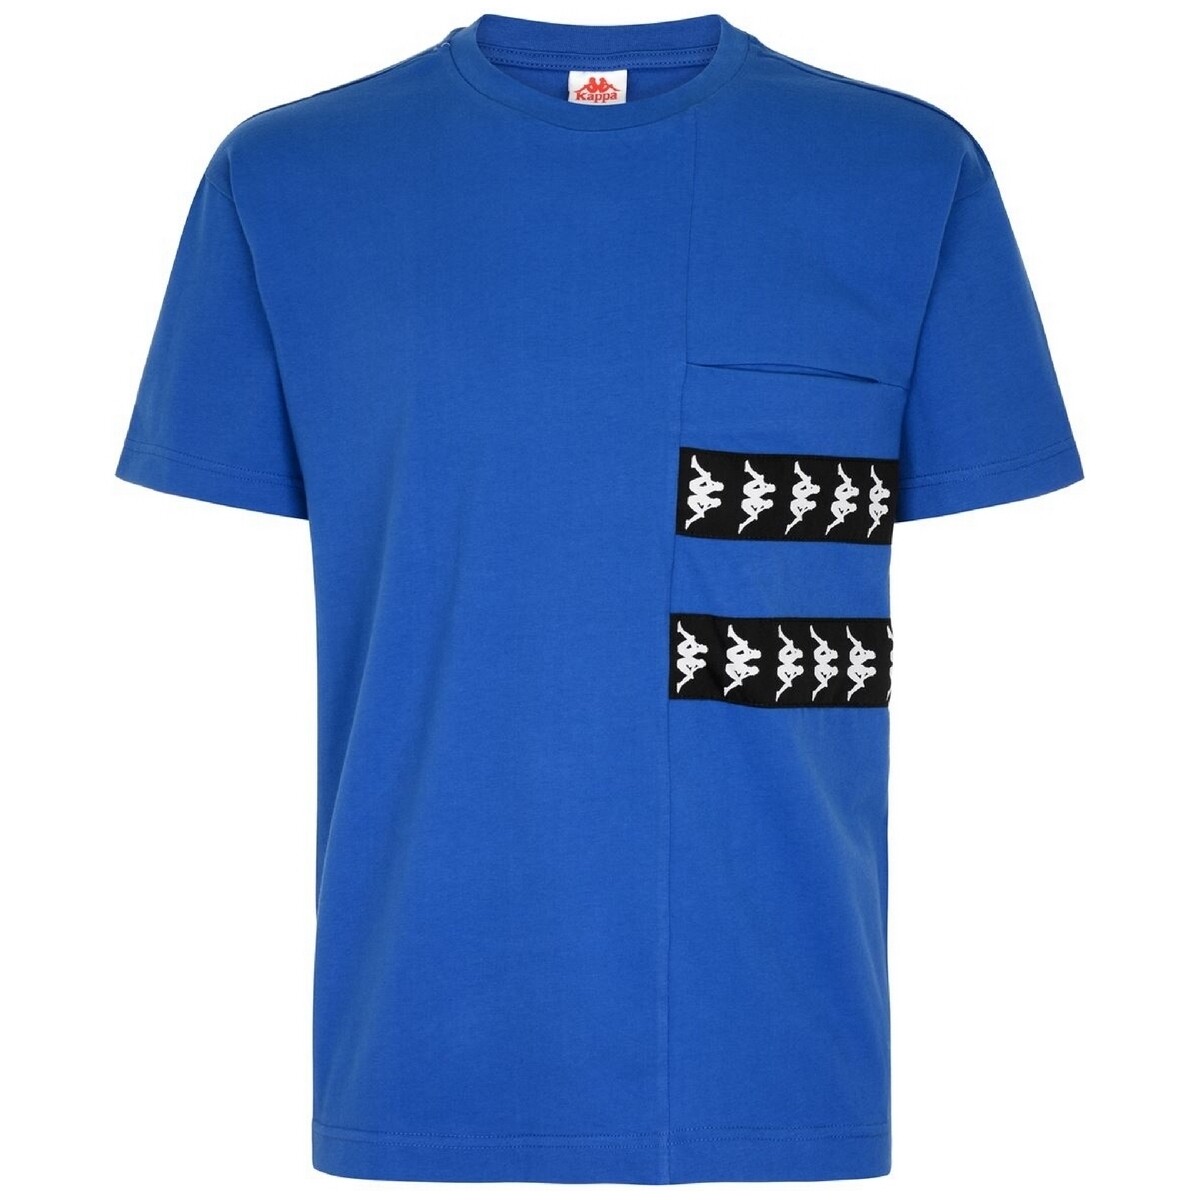 Abbigliamento Uomo T-shirt maniche corte Kappa 3117CJW Blu